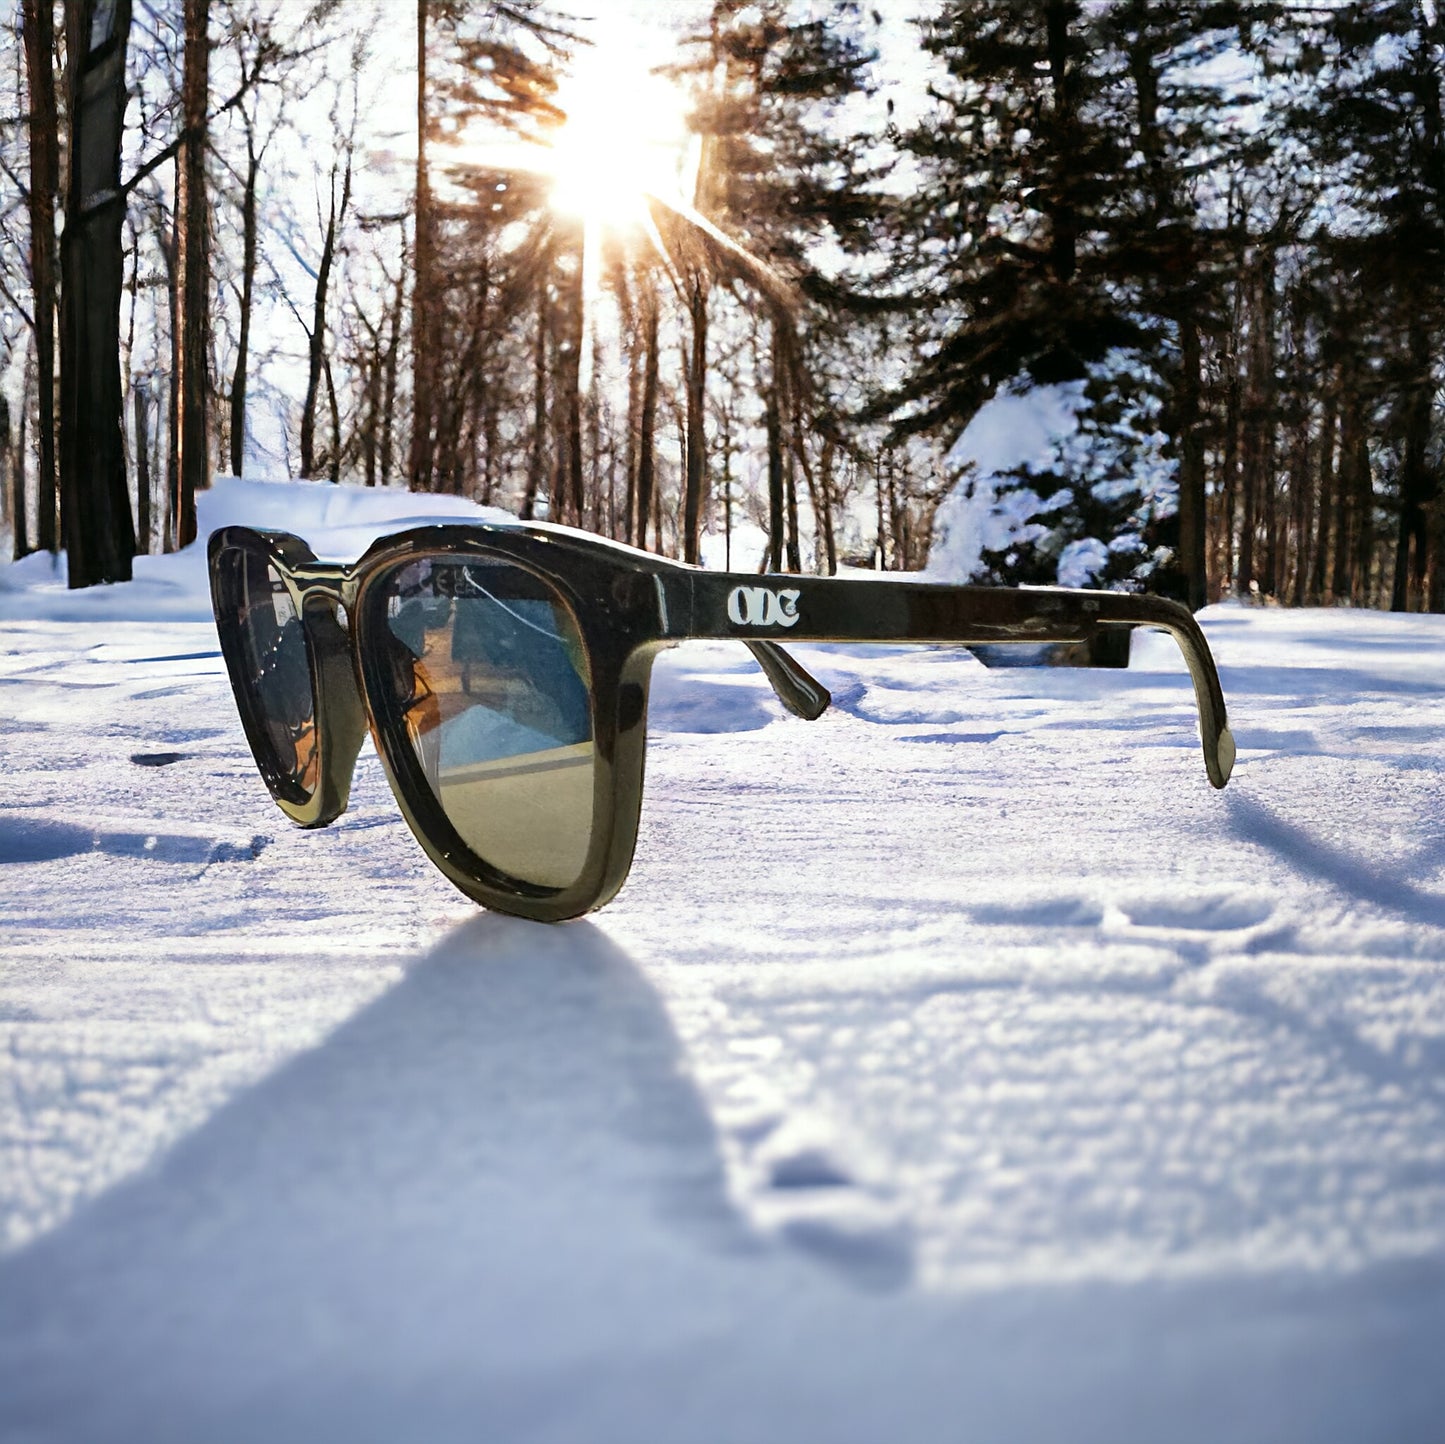 ODC Sunglasses Snow